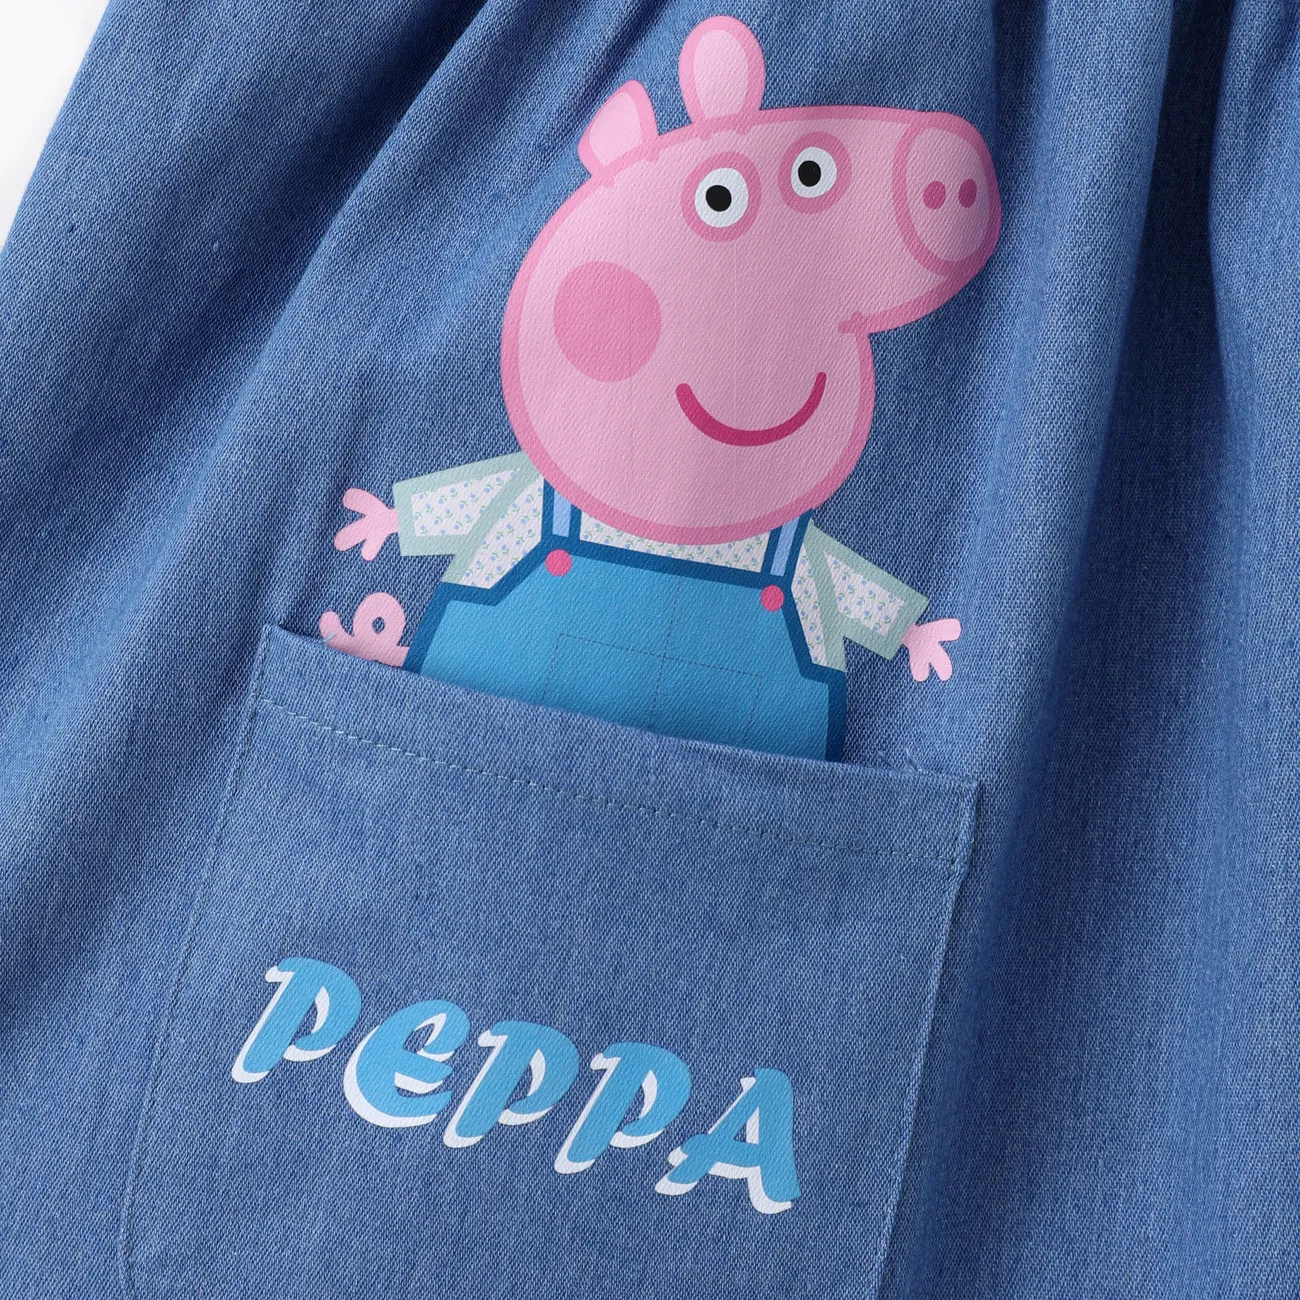 Peppa Pig بدلة تنورة 2 - 6 سنوات حريمي توب بحمالات كم فضفاض بكشكشة النباتات والزهور متعدد الألوان big image 1